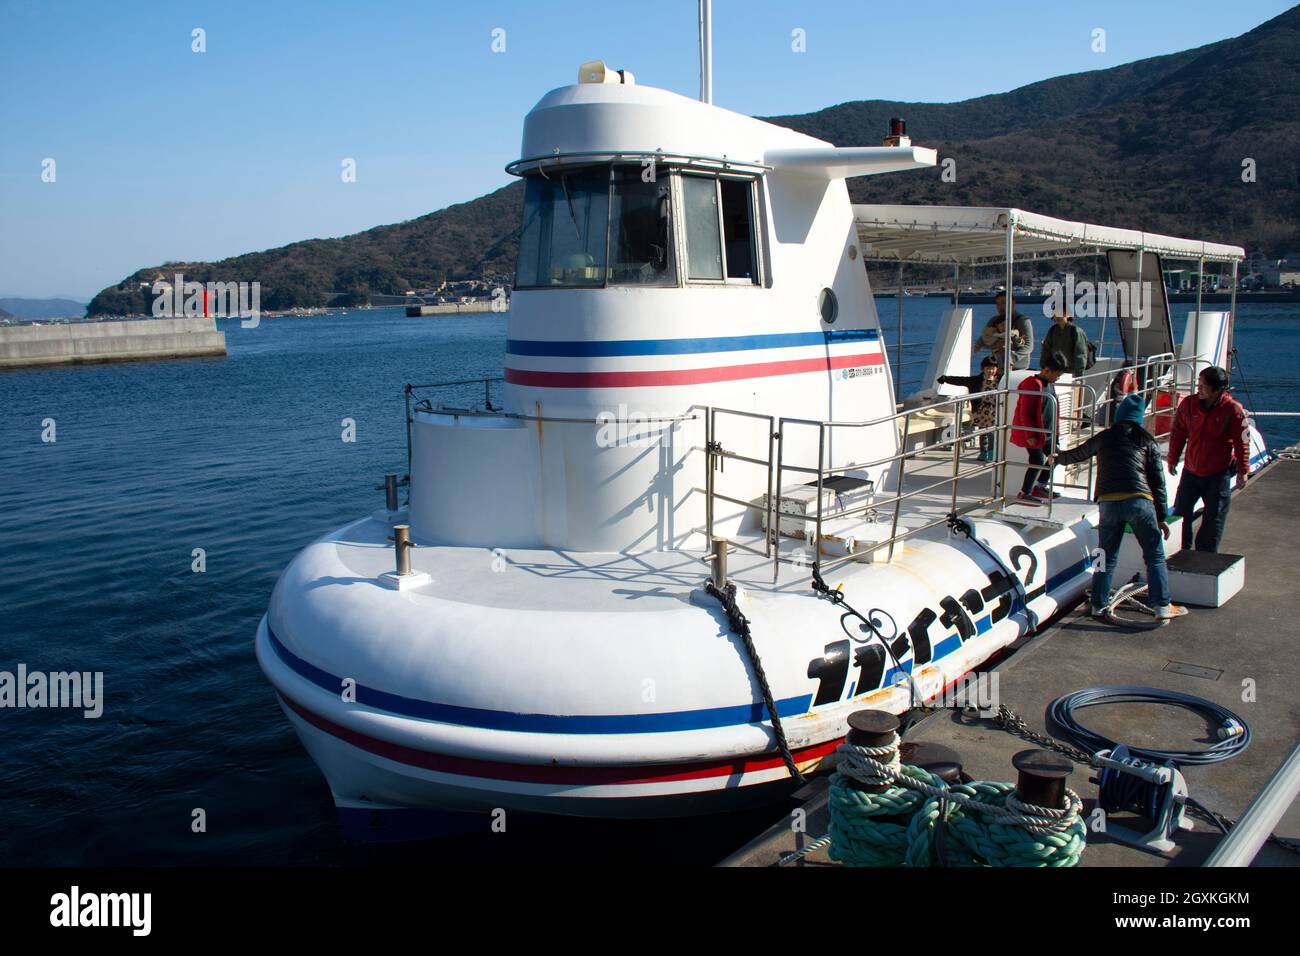 Tour boat for Saikai sightseeing,  Ainan, Japan Stock Photo